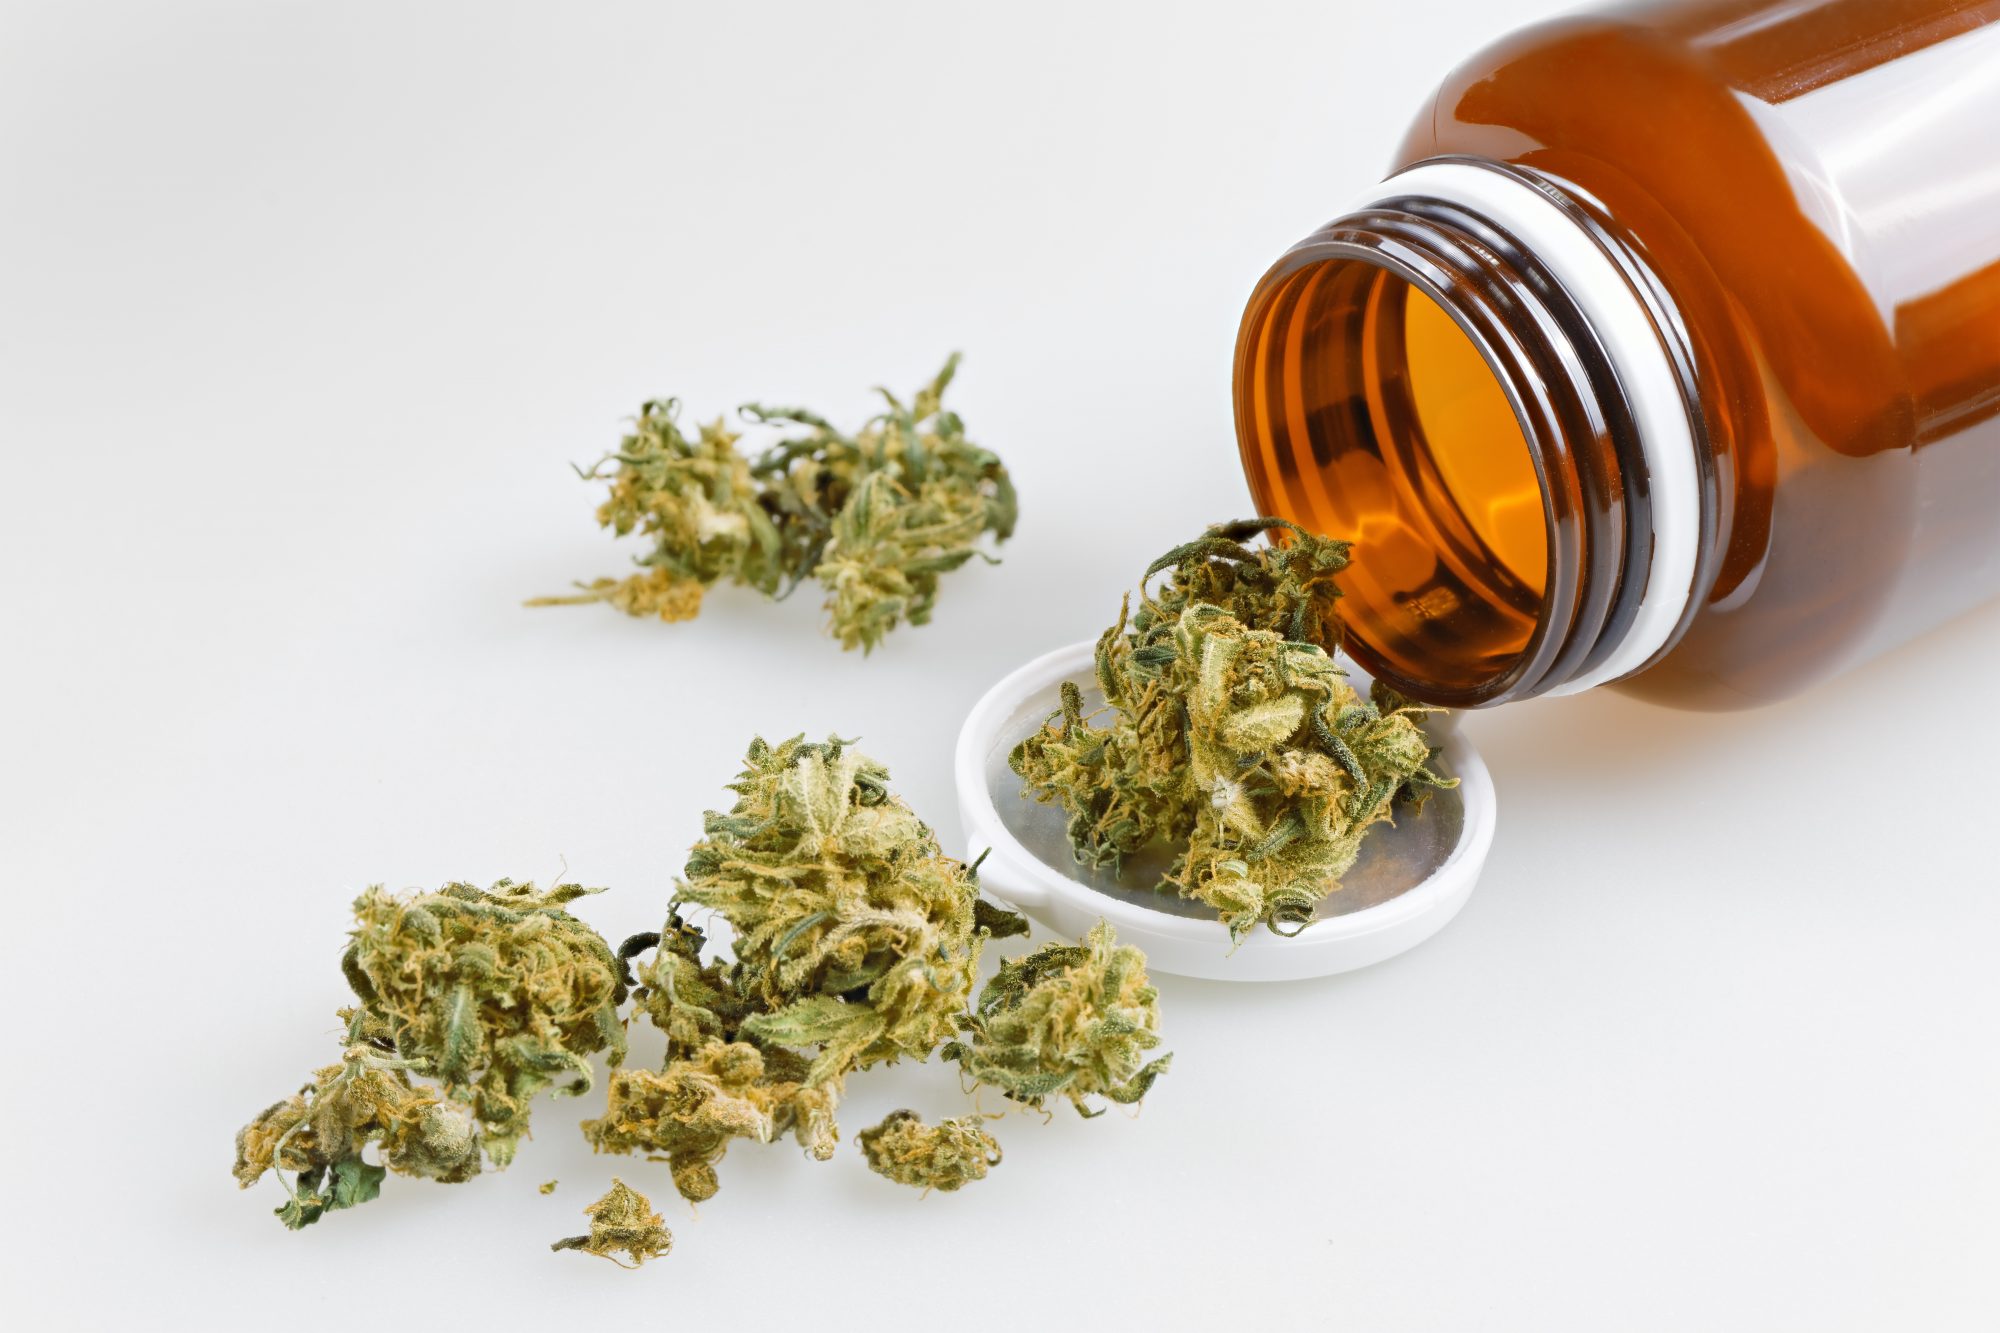 Medical use of cannabinoids and marijuana